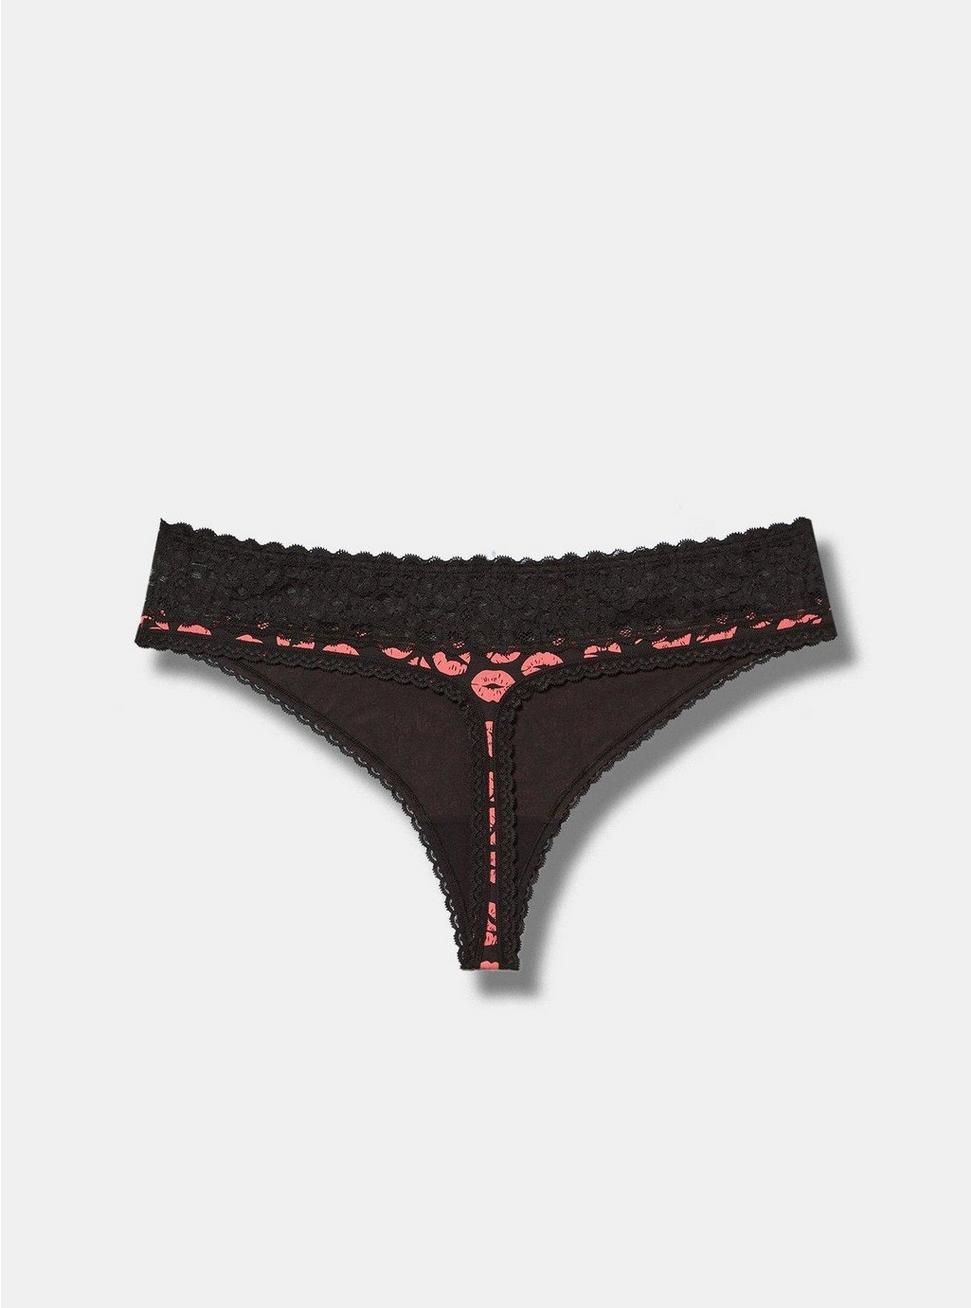 Buy Pg Girls Sexy Black Panty Thong Underwear With Custom Words